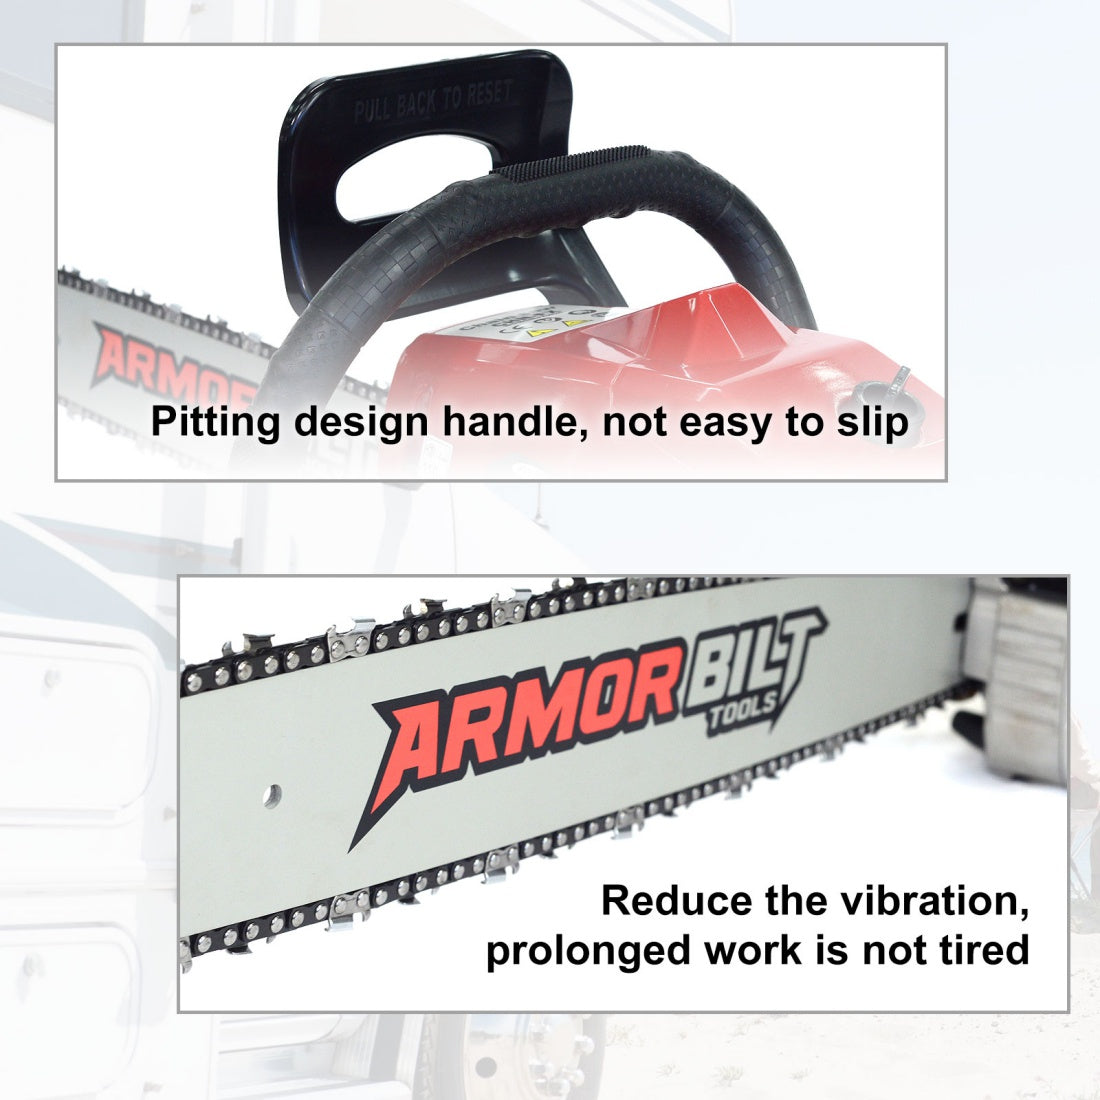 ArmorBilt 65cc Petrol Commercial Chainsaw 20" Bar E-Start Pruning Chain Saw